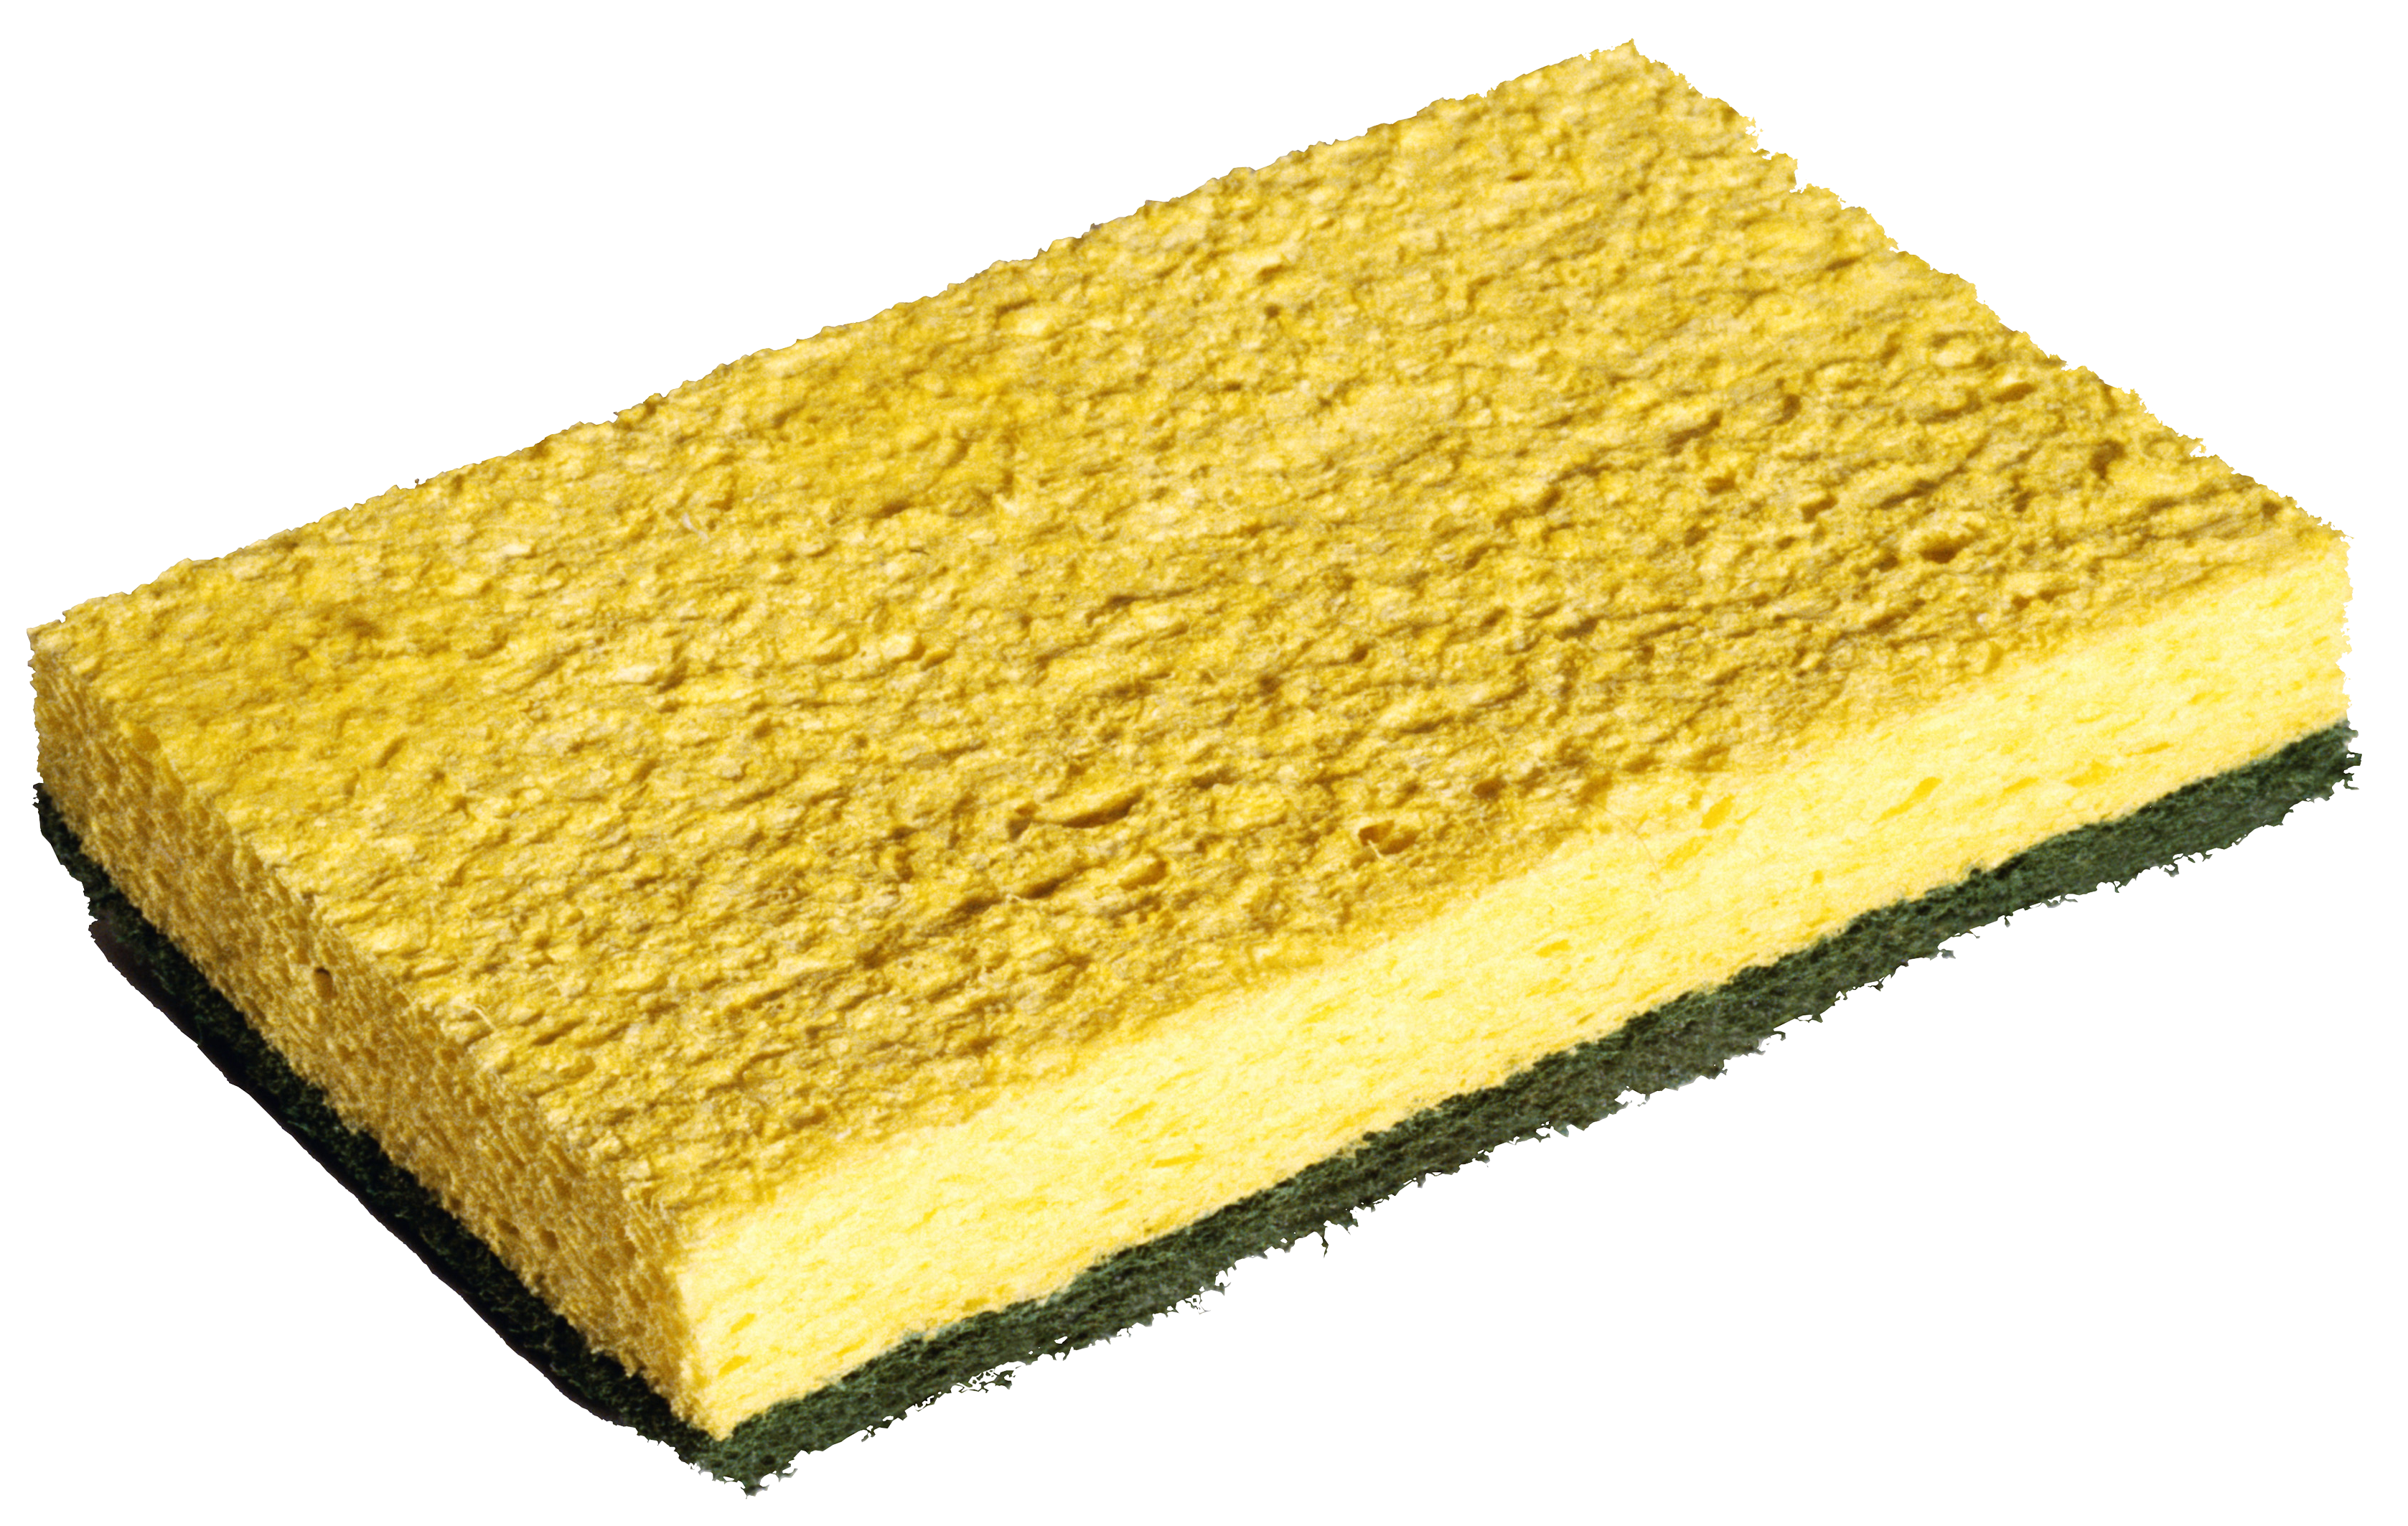 Sponge PNG images 